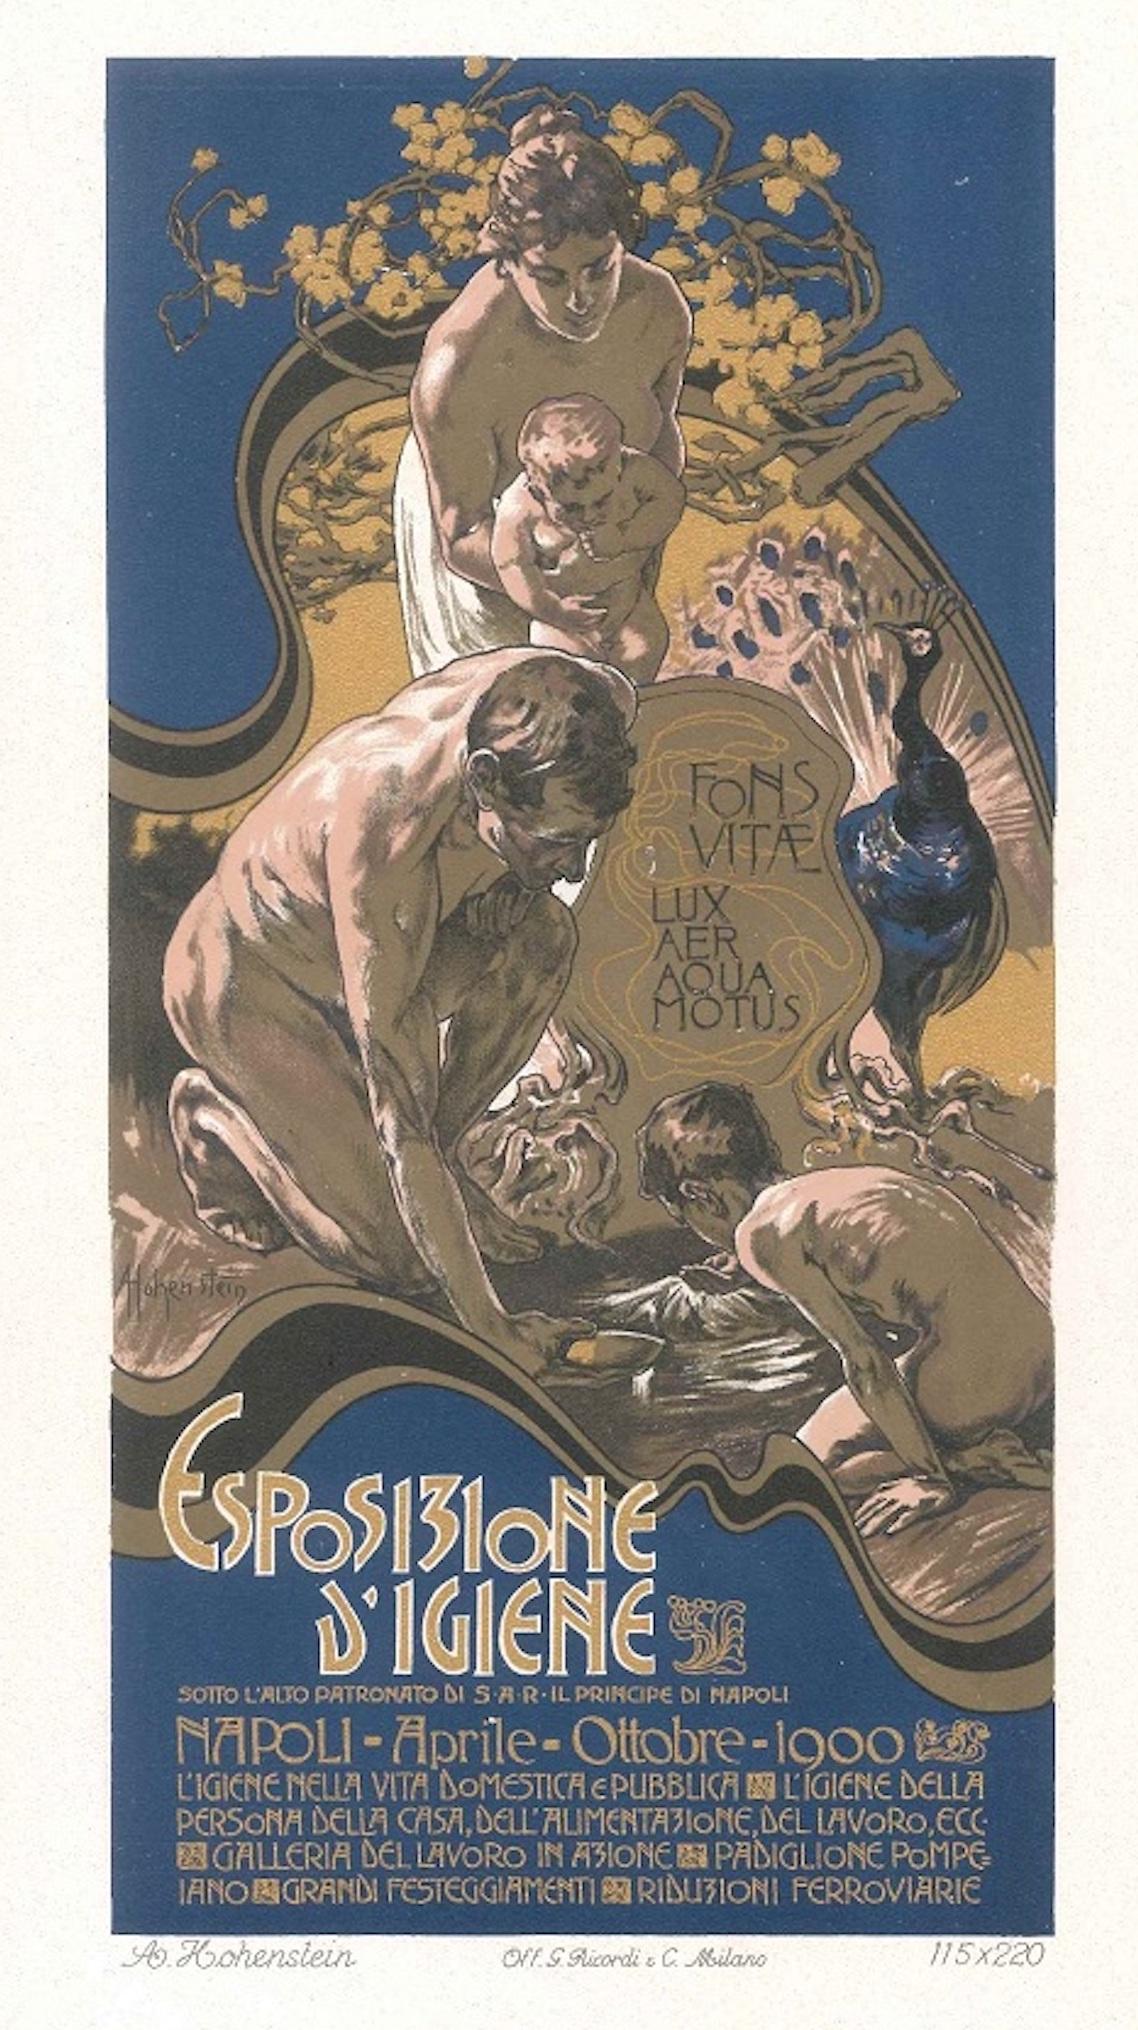 Adolfo Hohenstein Figurative Print - Esposizione d'Igiene - Original Lithograph by A. Hohenstein - 1900